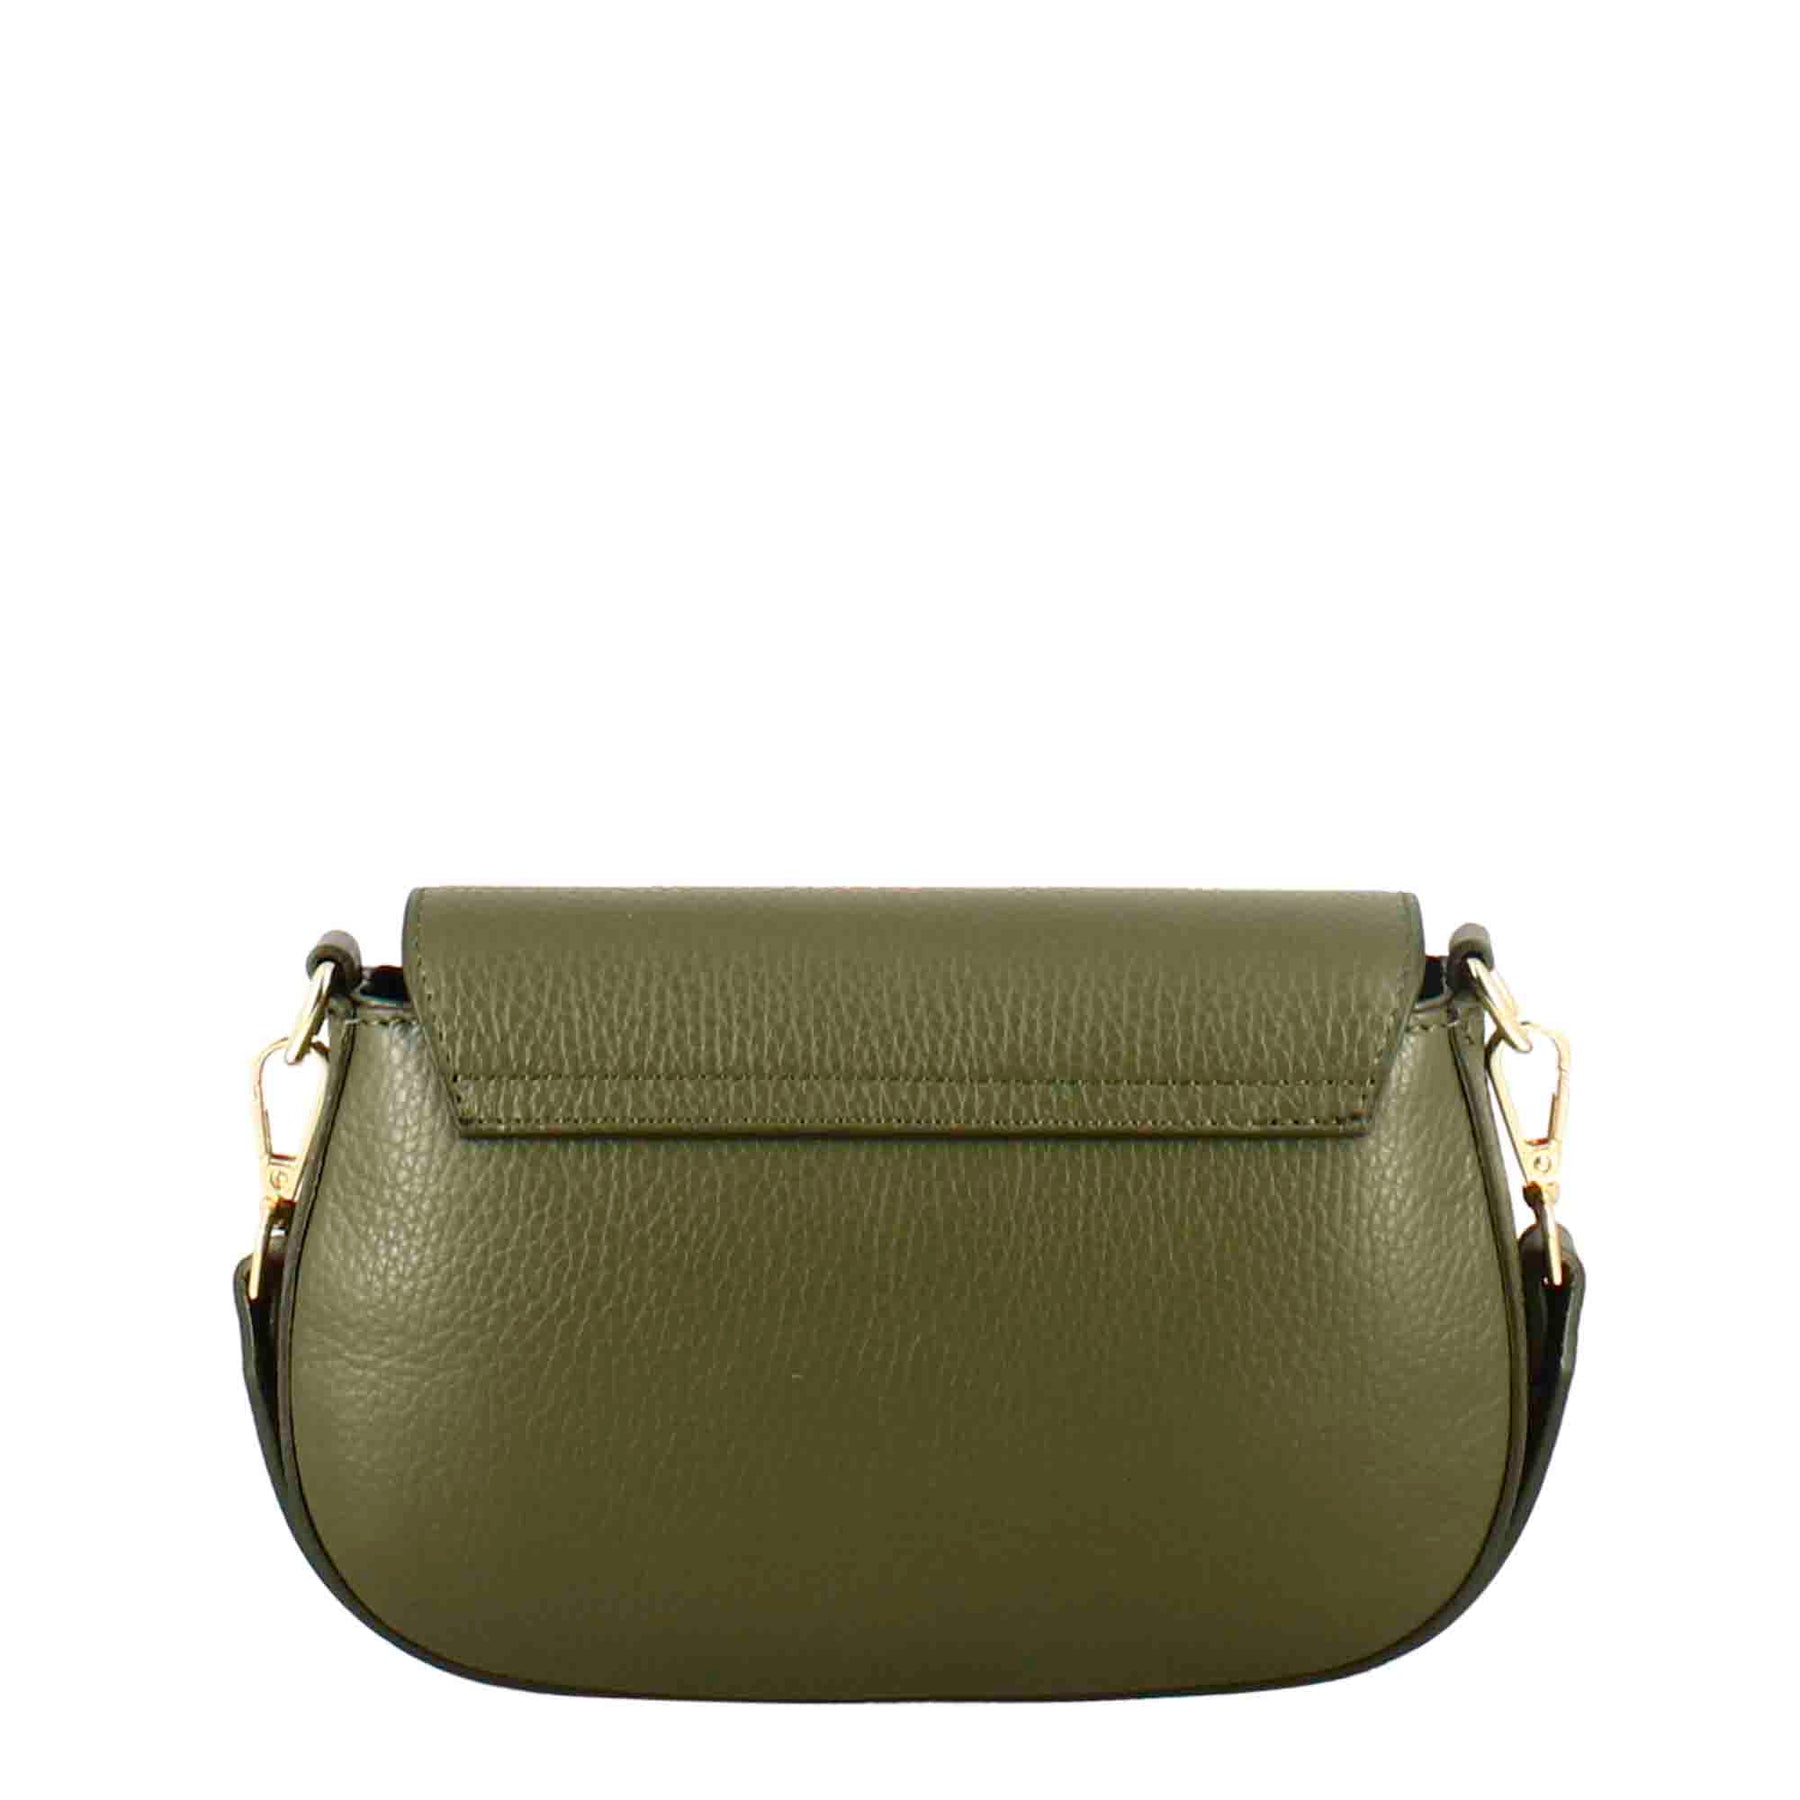 Grace women's green leather handbag